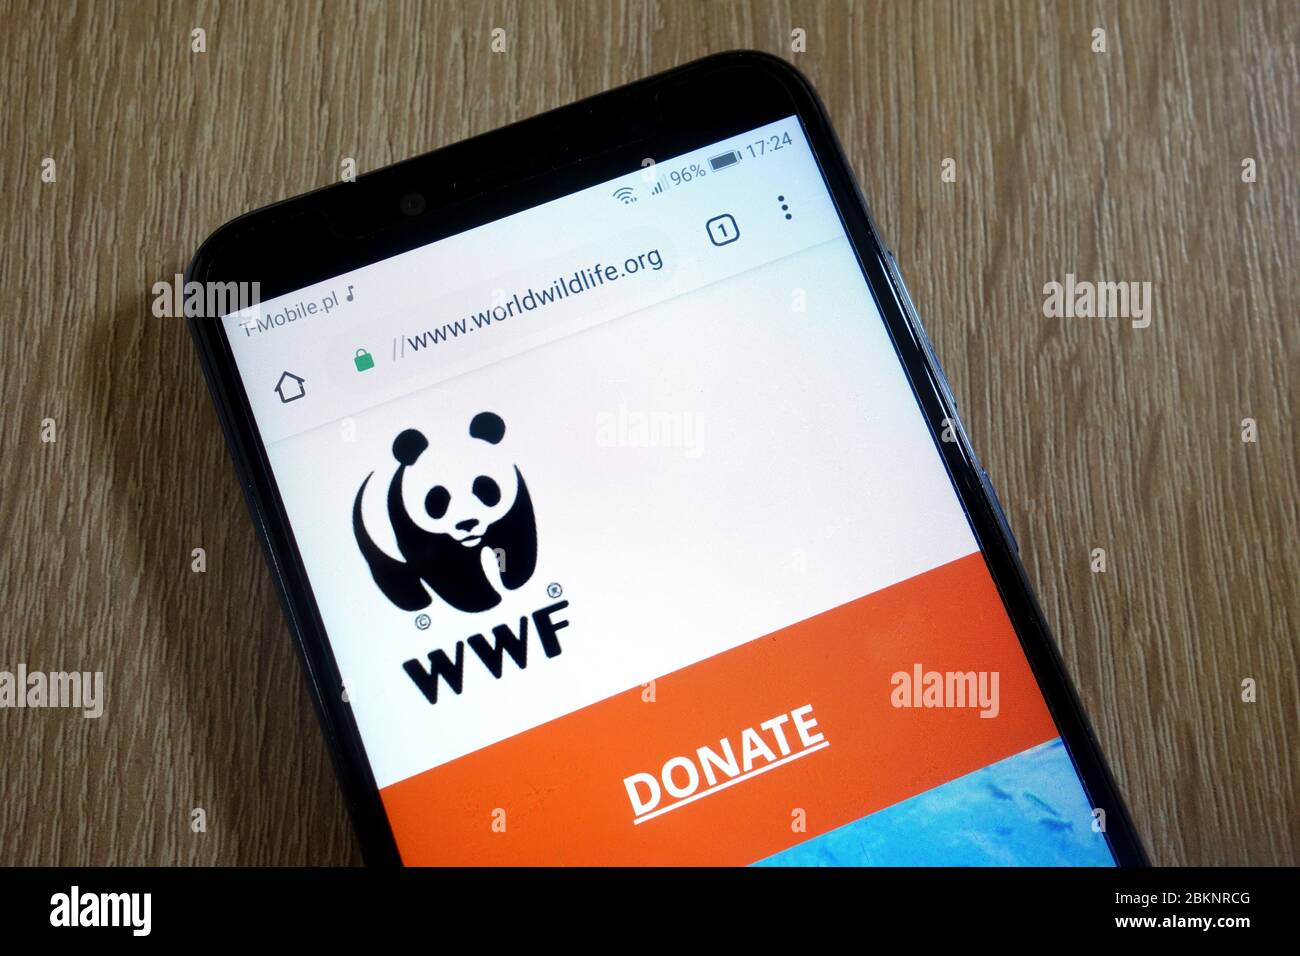 World Wide Fund for Nature (WWF) website (www.worldwildlife.org) displayed on smartphone Stock Photo Alamy